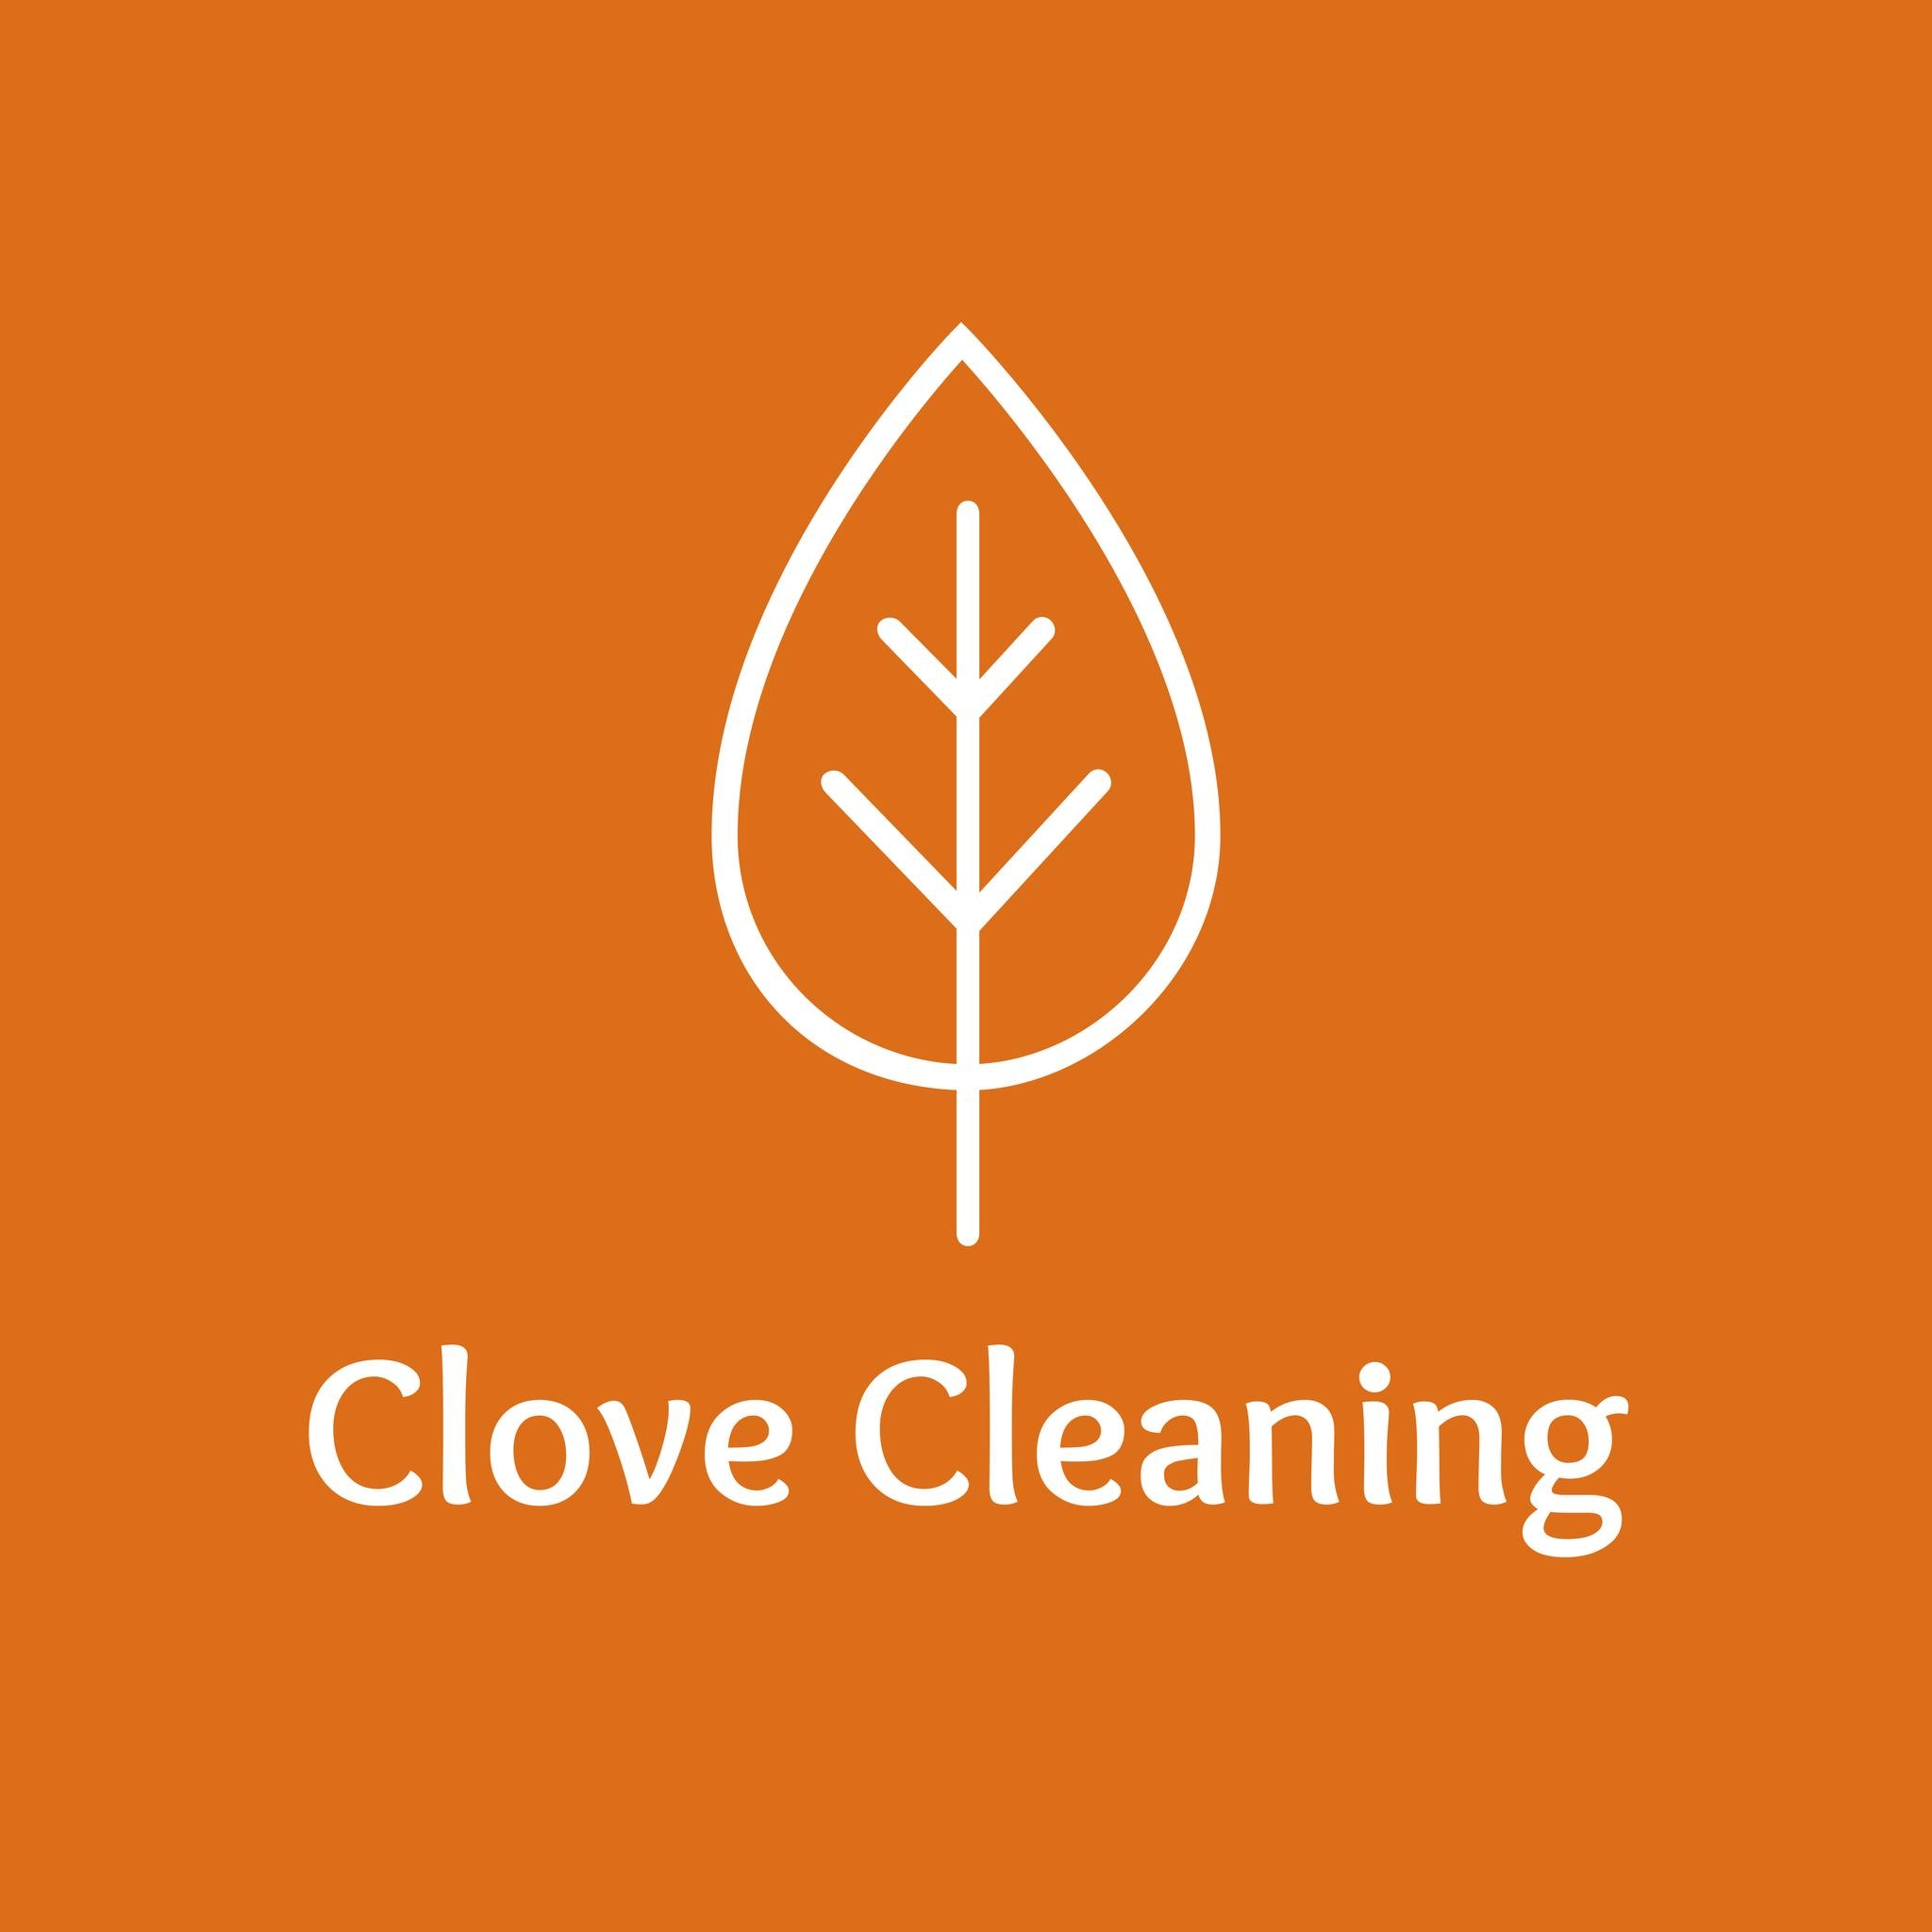 Clove-Cleaning-logo.jpg